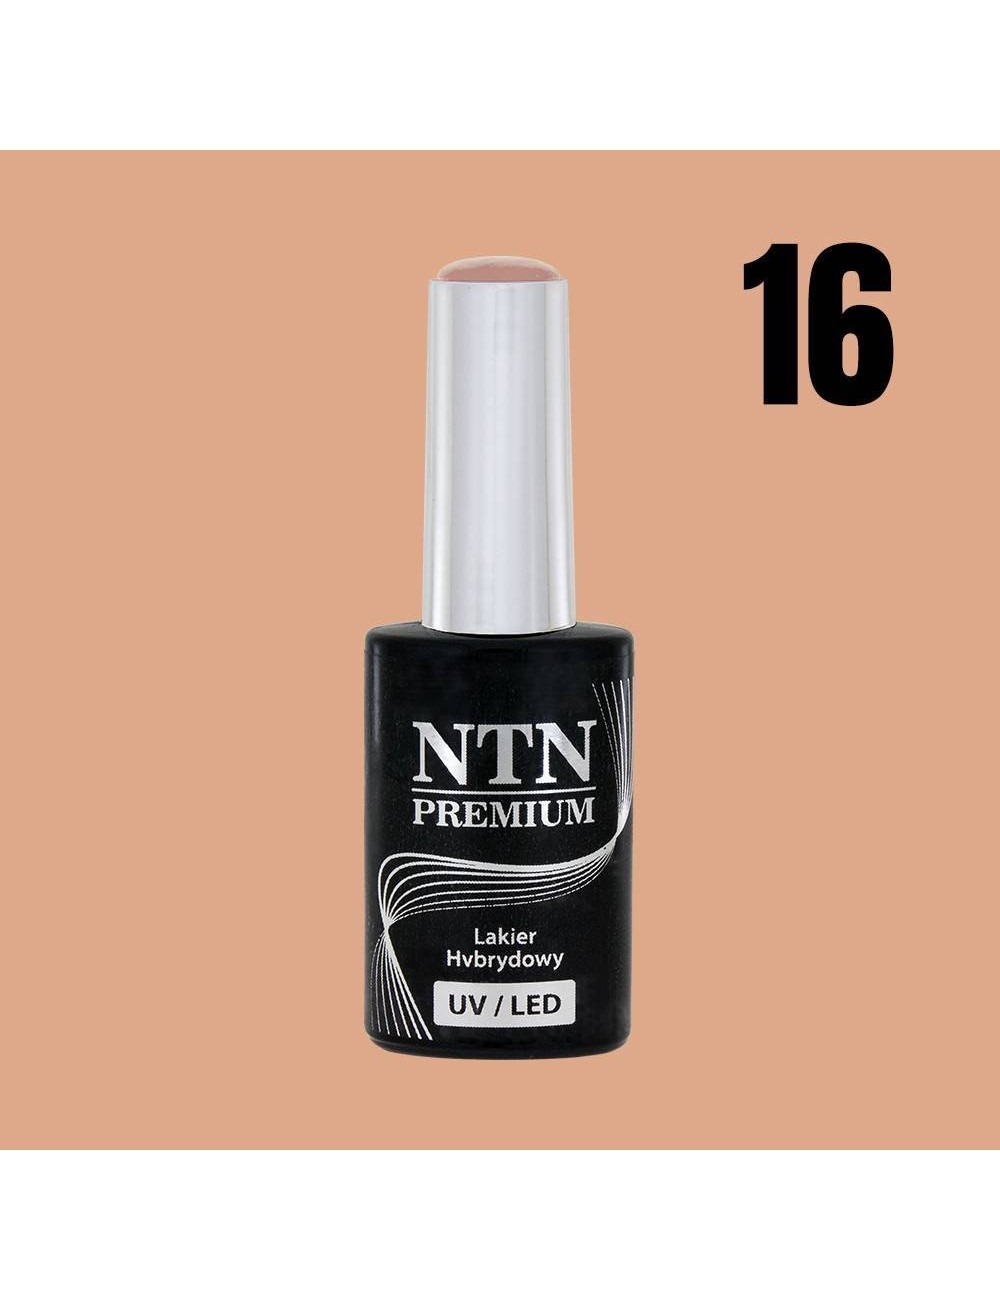 NTN premium 16